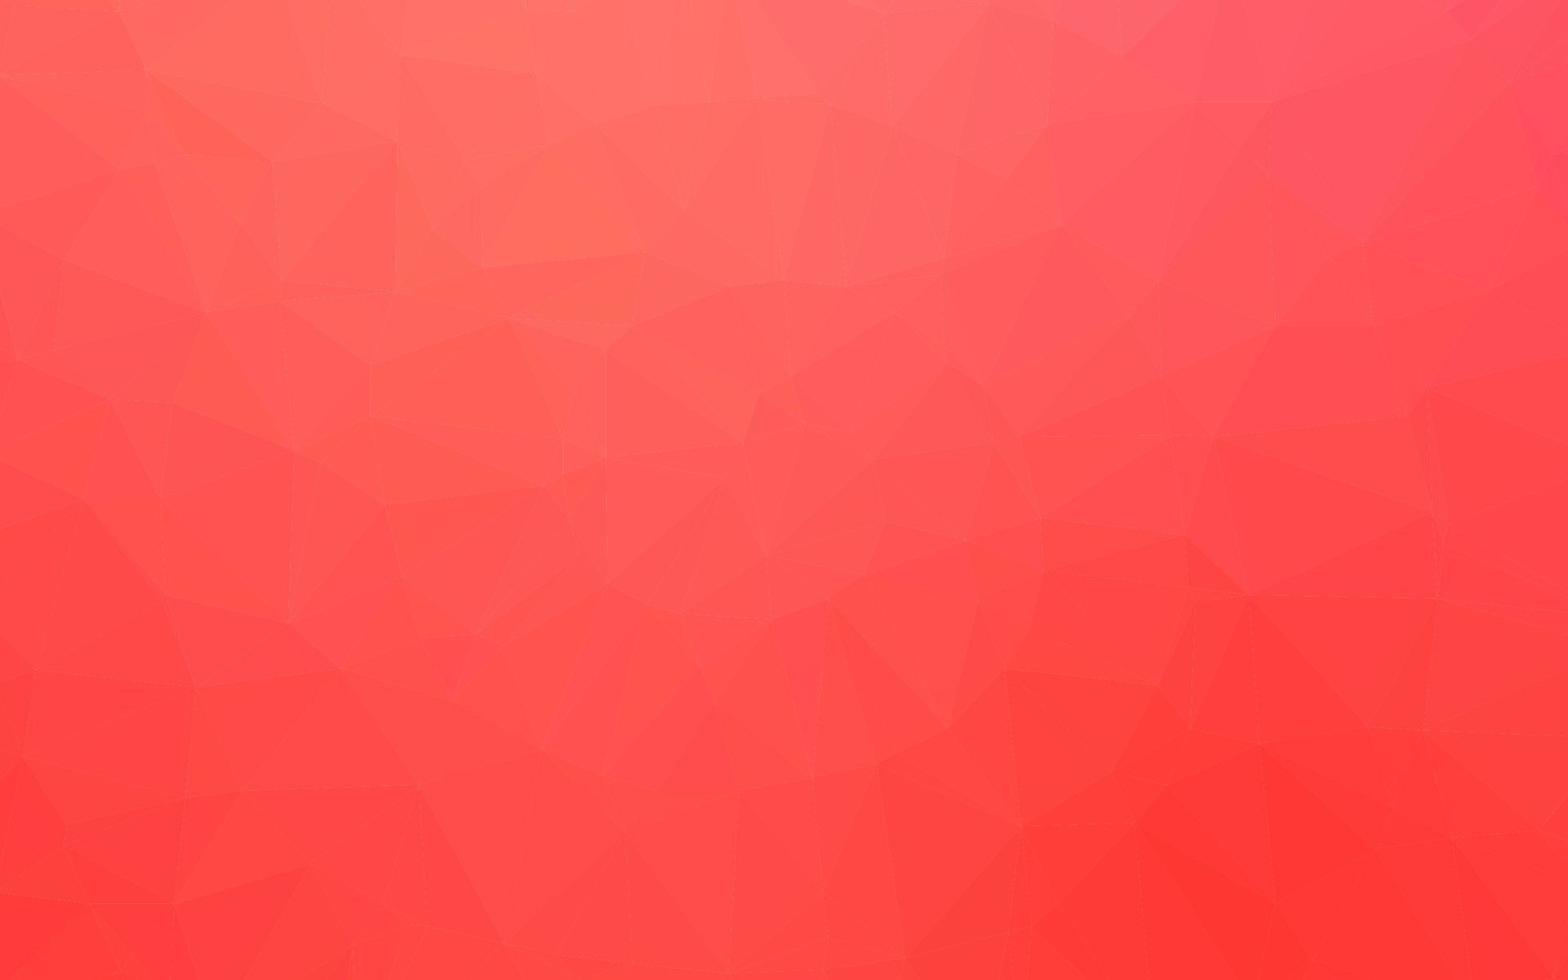 cubierta poligonal abstracta de vector rojo claro.